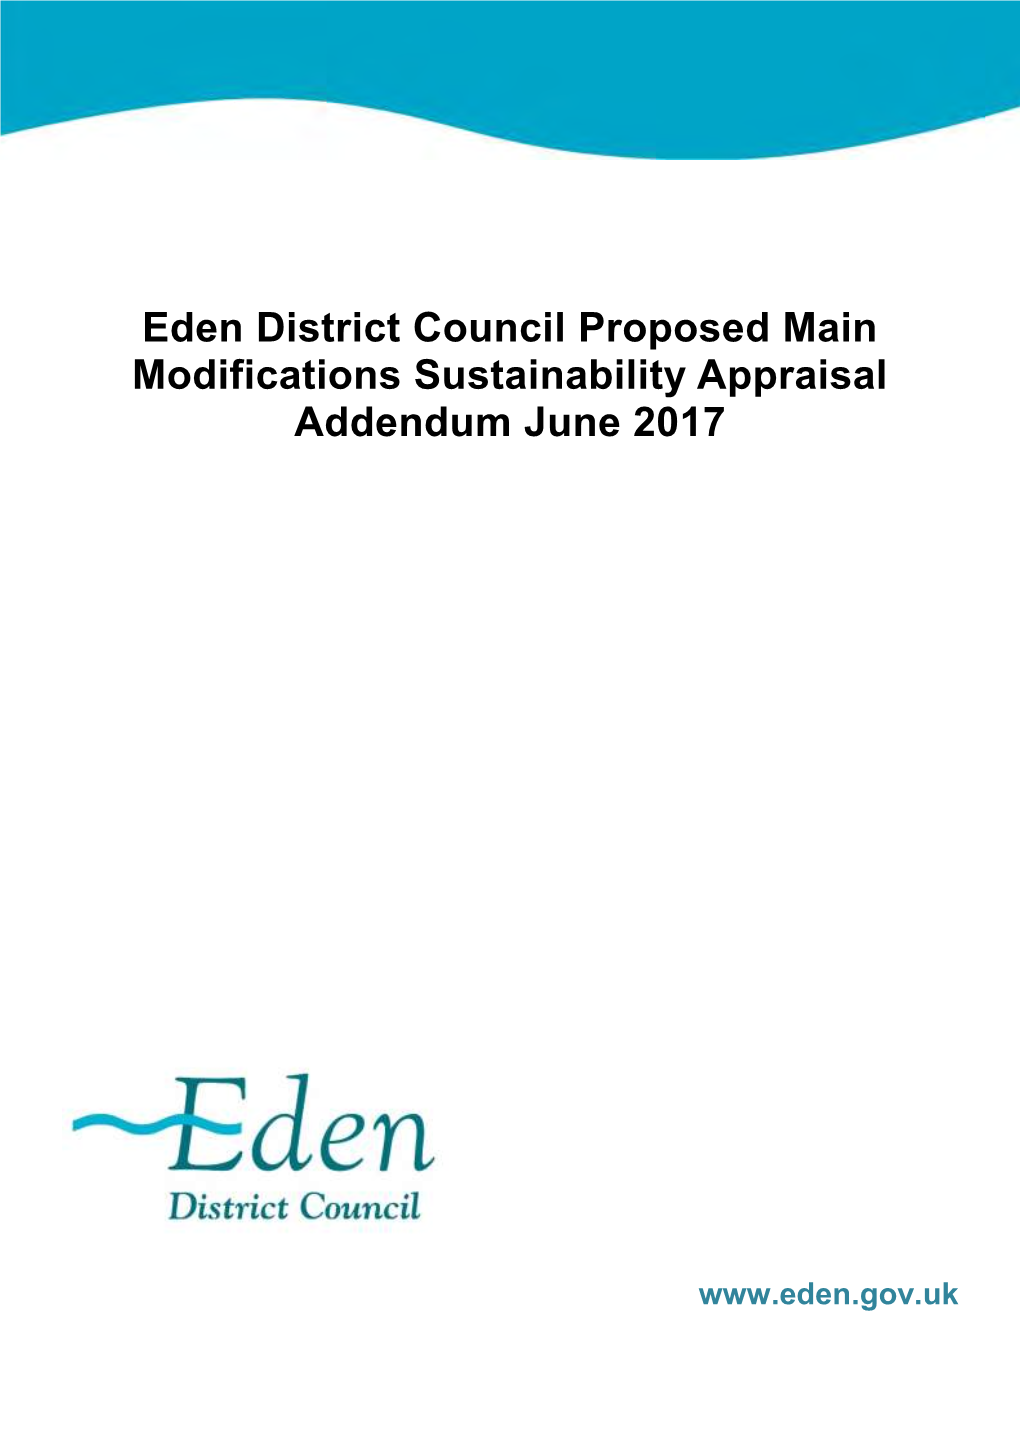 Sustainability Appraisal Addendum June 2017